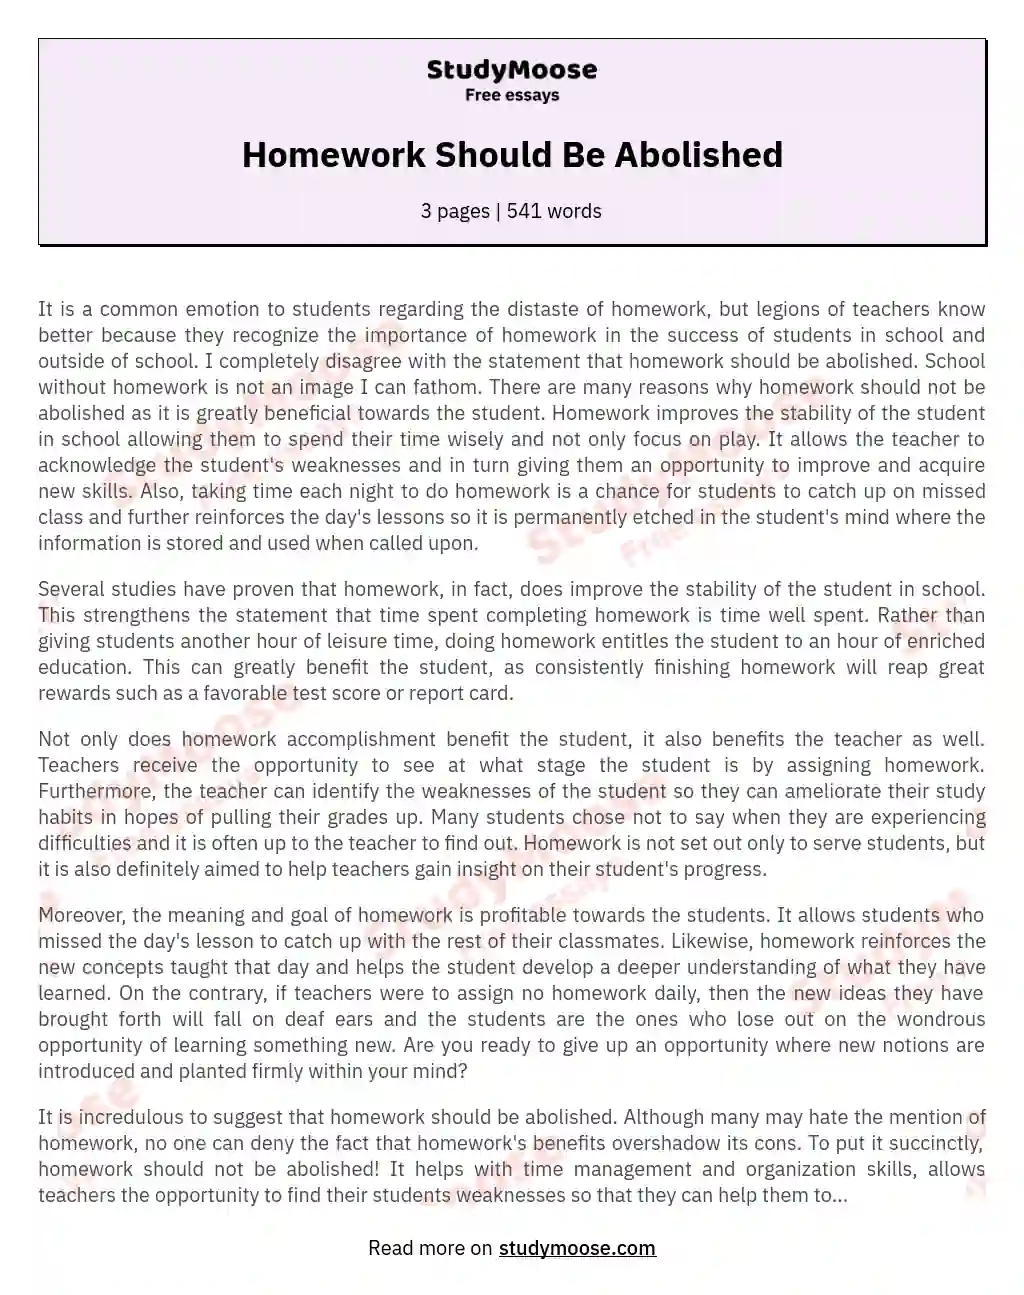 Homework Should Be Abolished